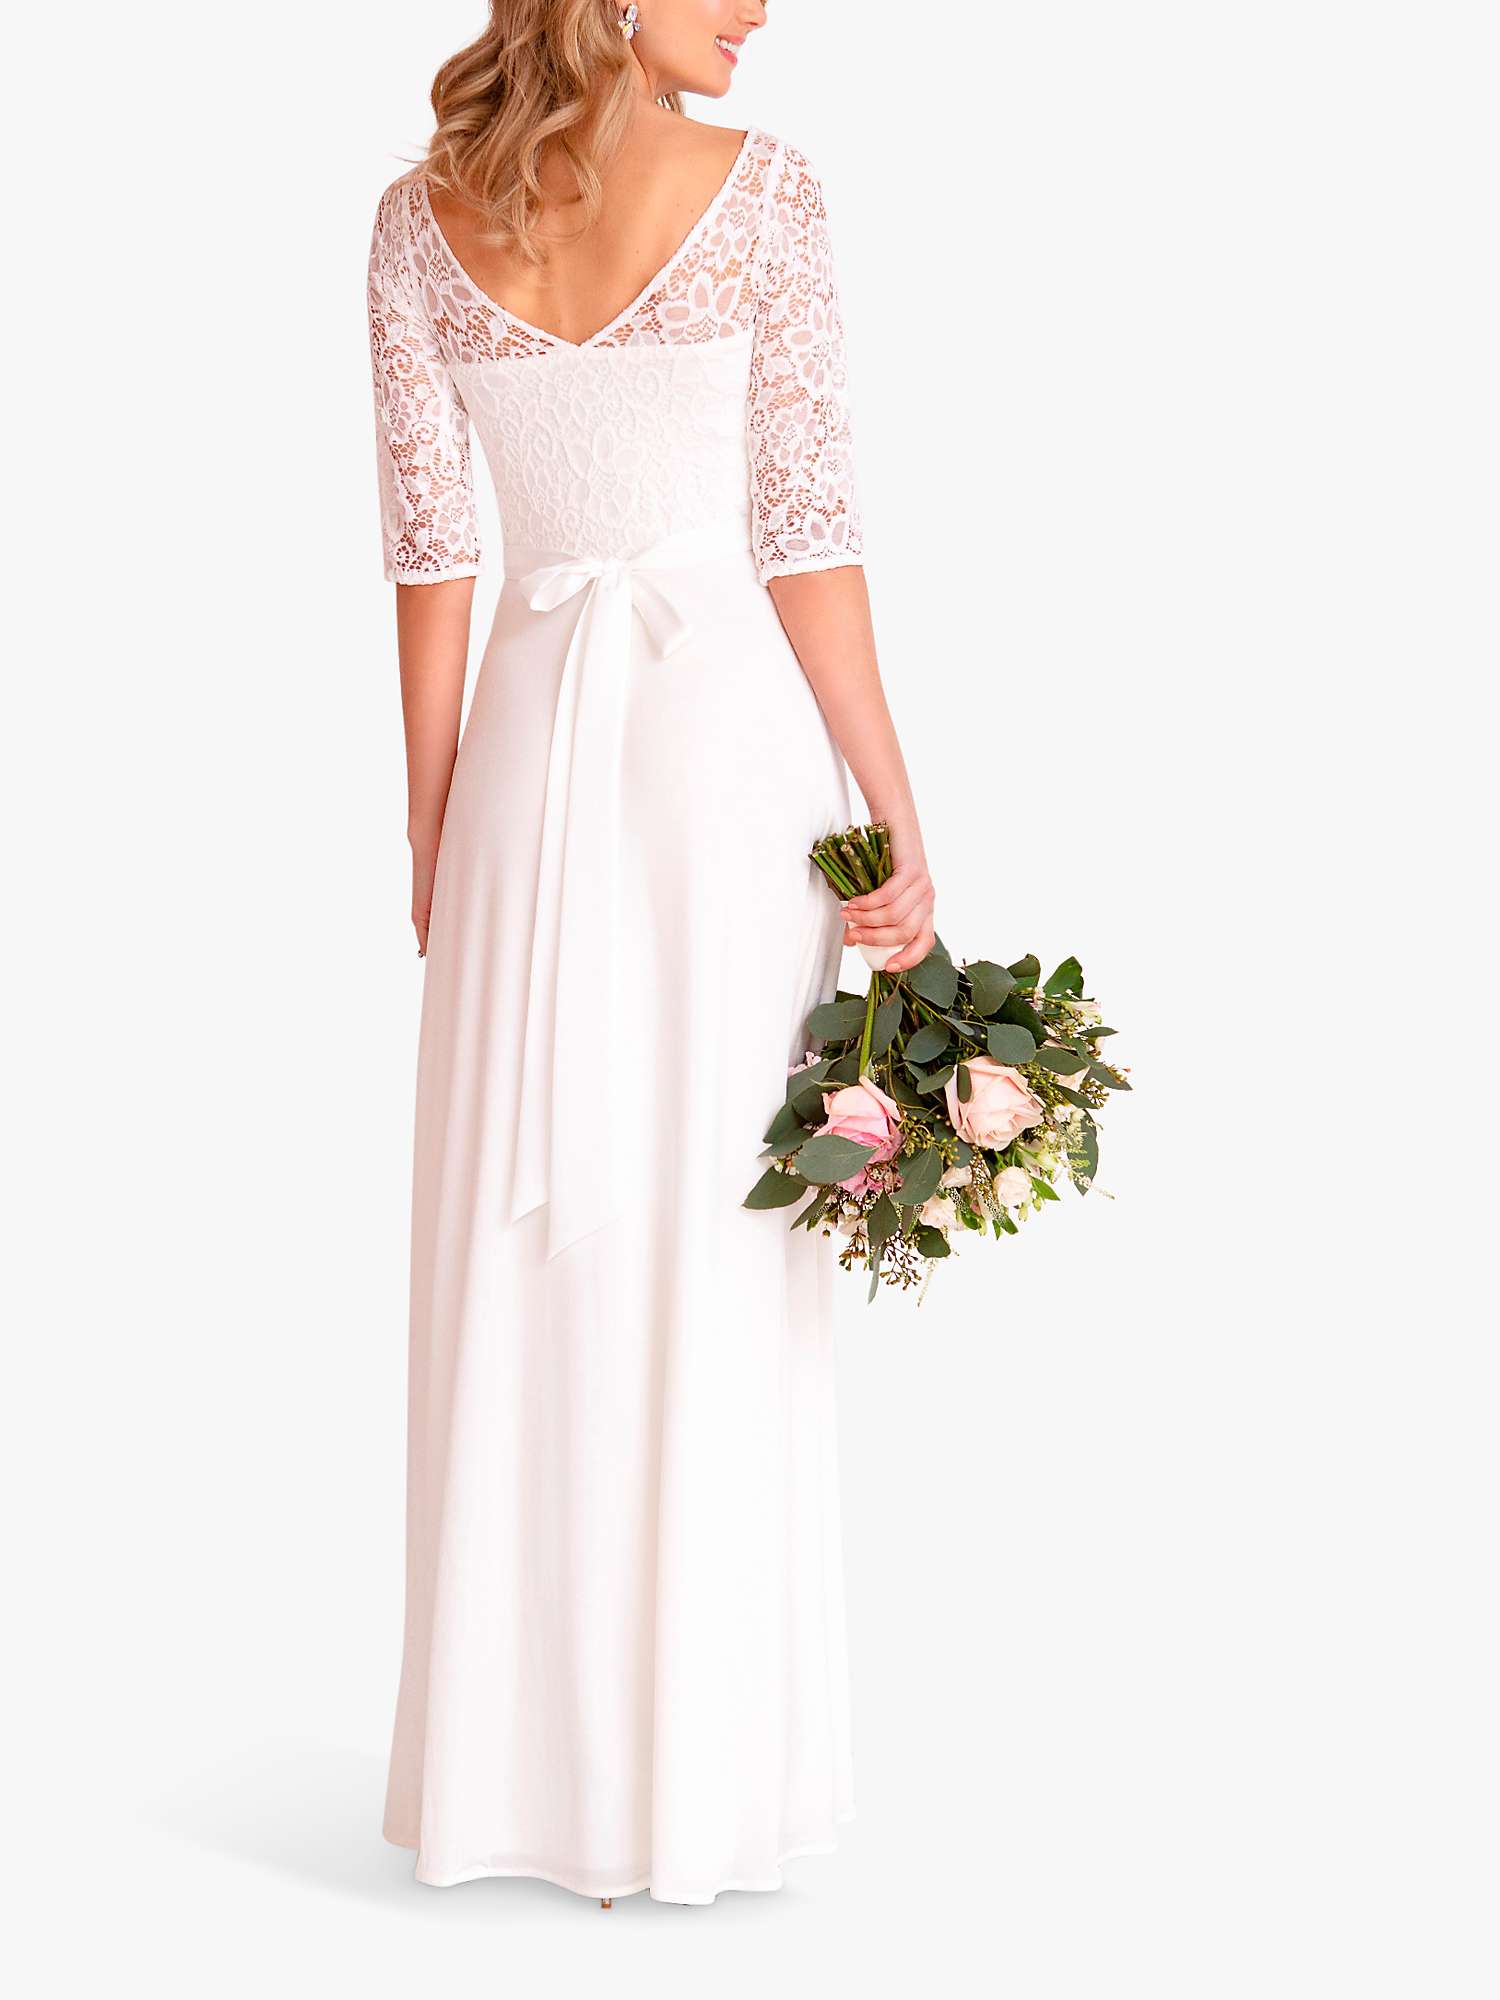 Buy Alie Street Adrianna Floral Lace Bodice Wedding Dress, Belt Sold Separately, Ivory Online at johnlewis.com